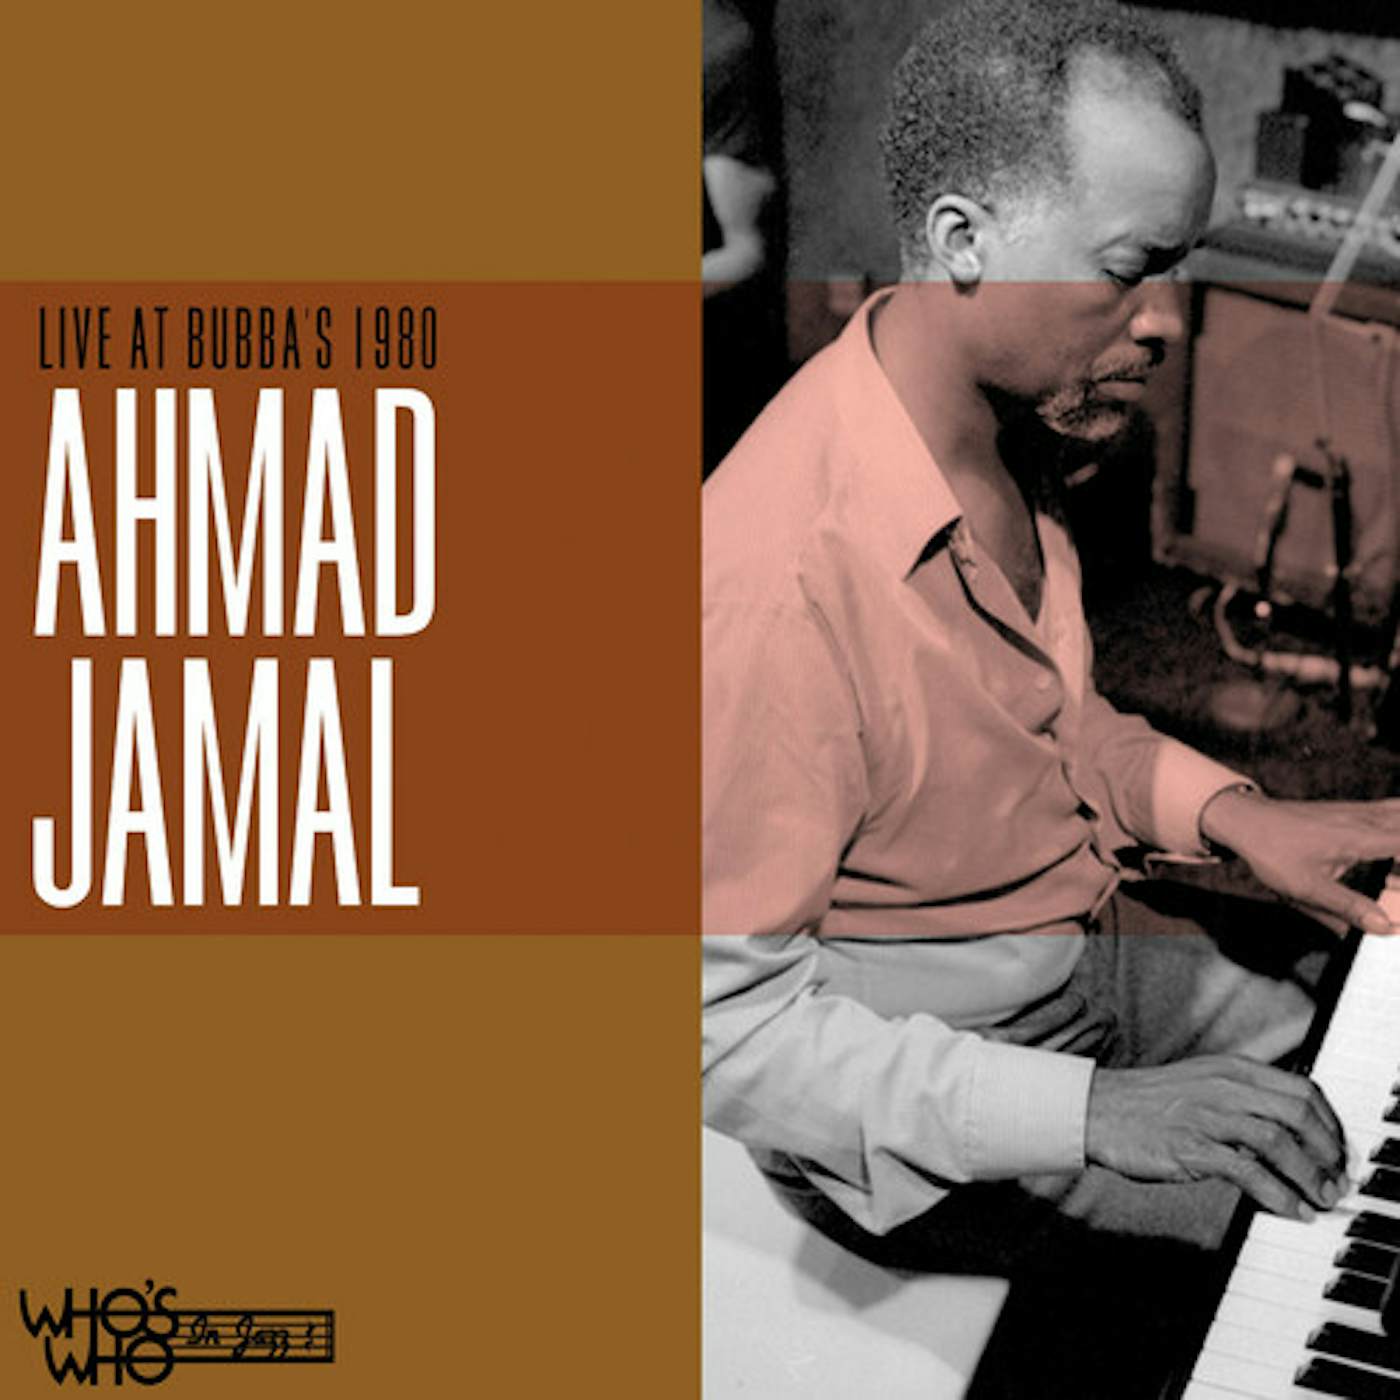 Ahmad Jamal LIVE AT BUBBA'S 1980 CD